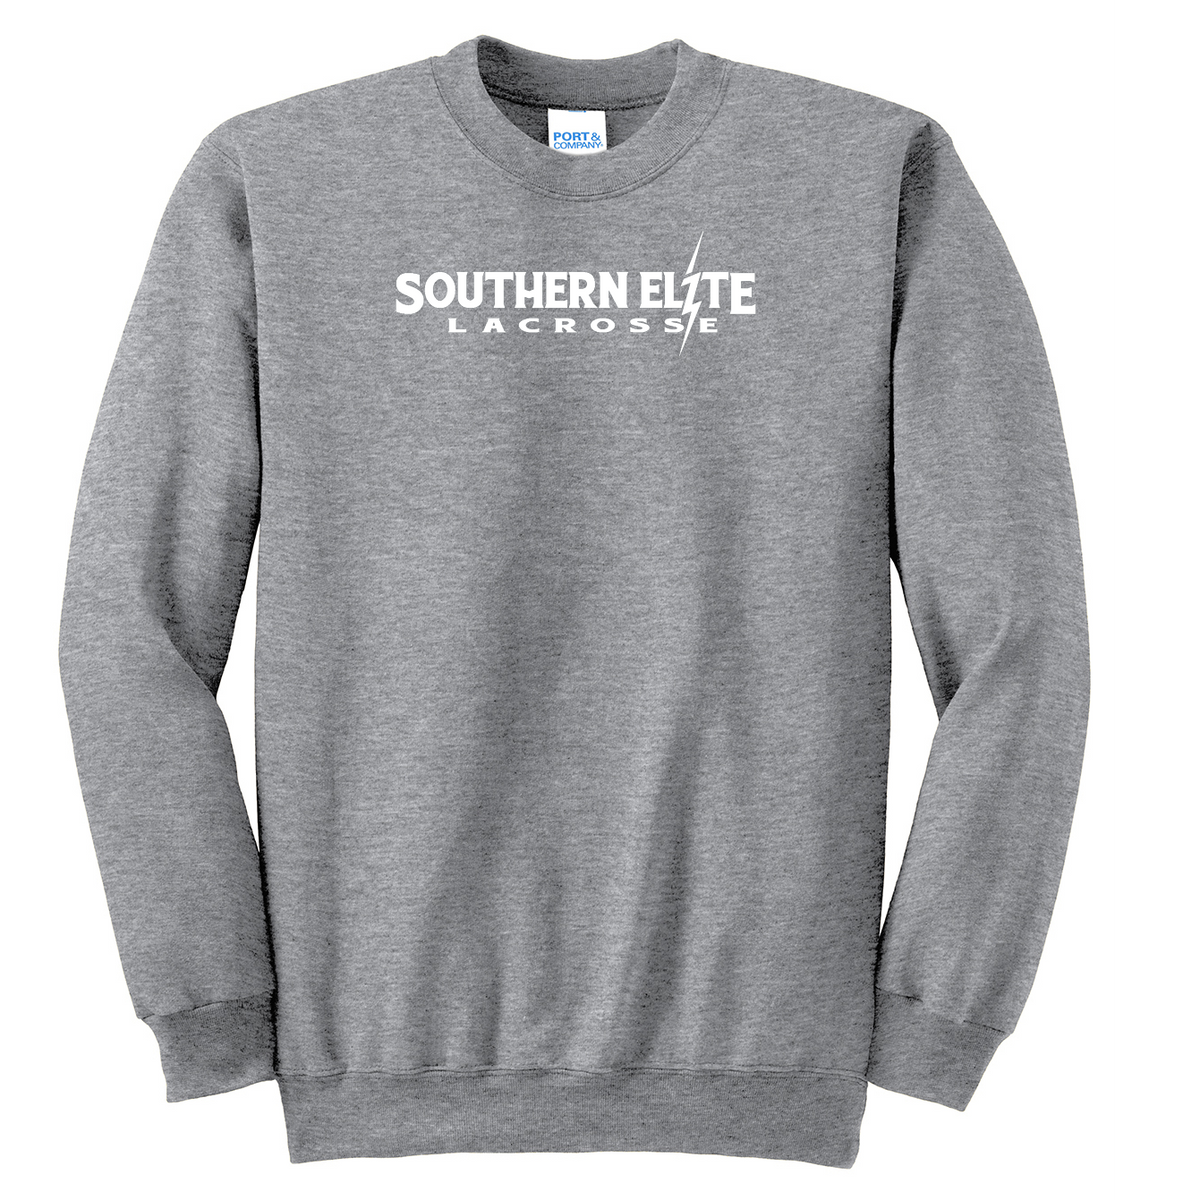 Southern Elite Lacrosse  Crew Neck Sweater